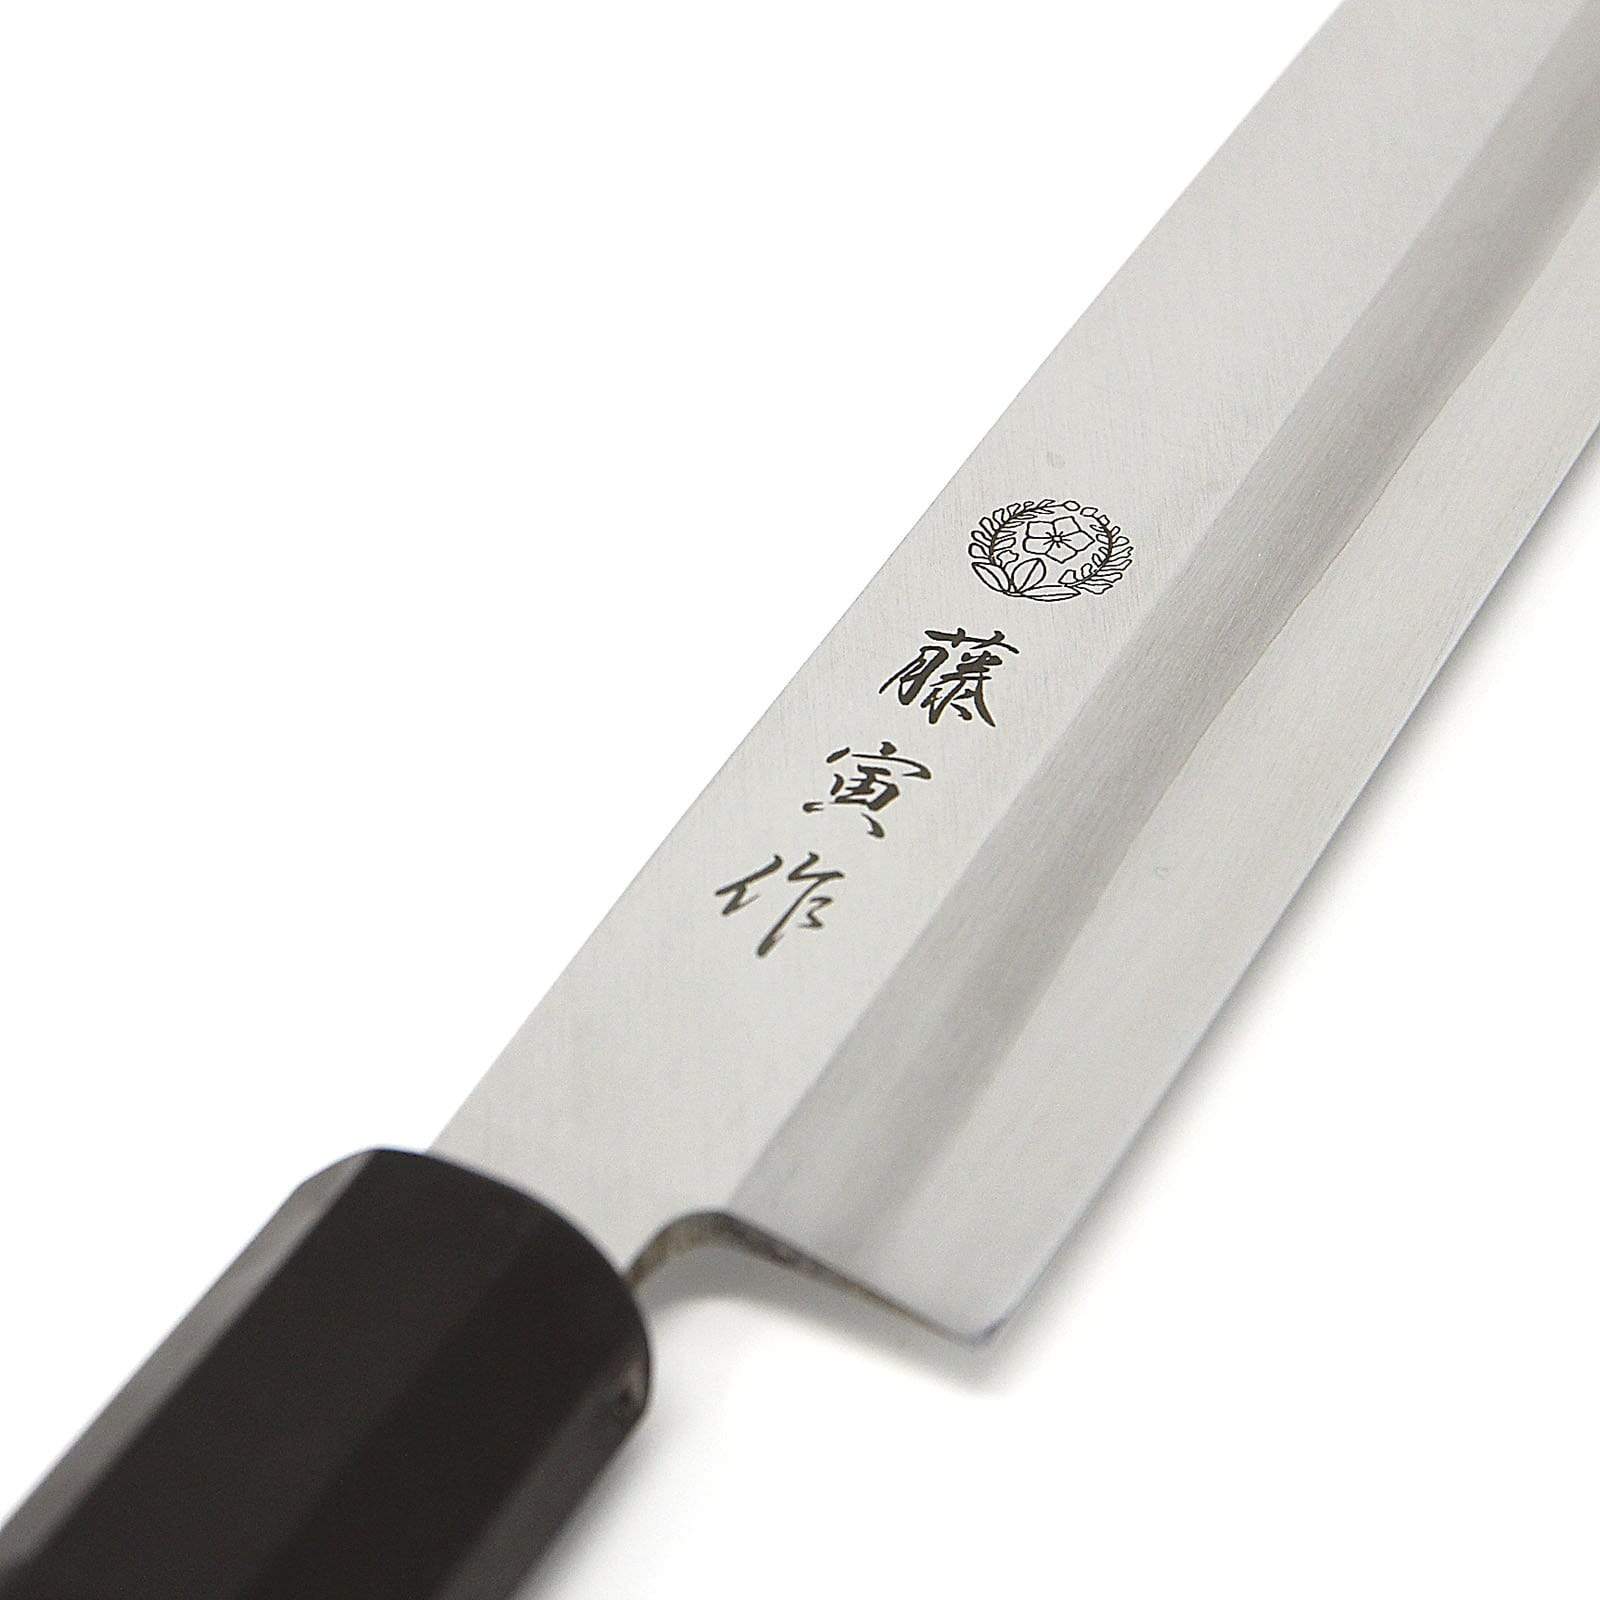 https://cdn.shopify.com/s/files/1/1610/3863/products/tojiro-fujitora-mv-2-layer-yanagiba-knife-with-elastomer-handle-yanagiba-knives-4183691100243_1600x.jpg?v=1563994141